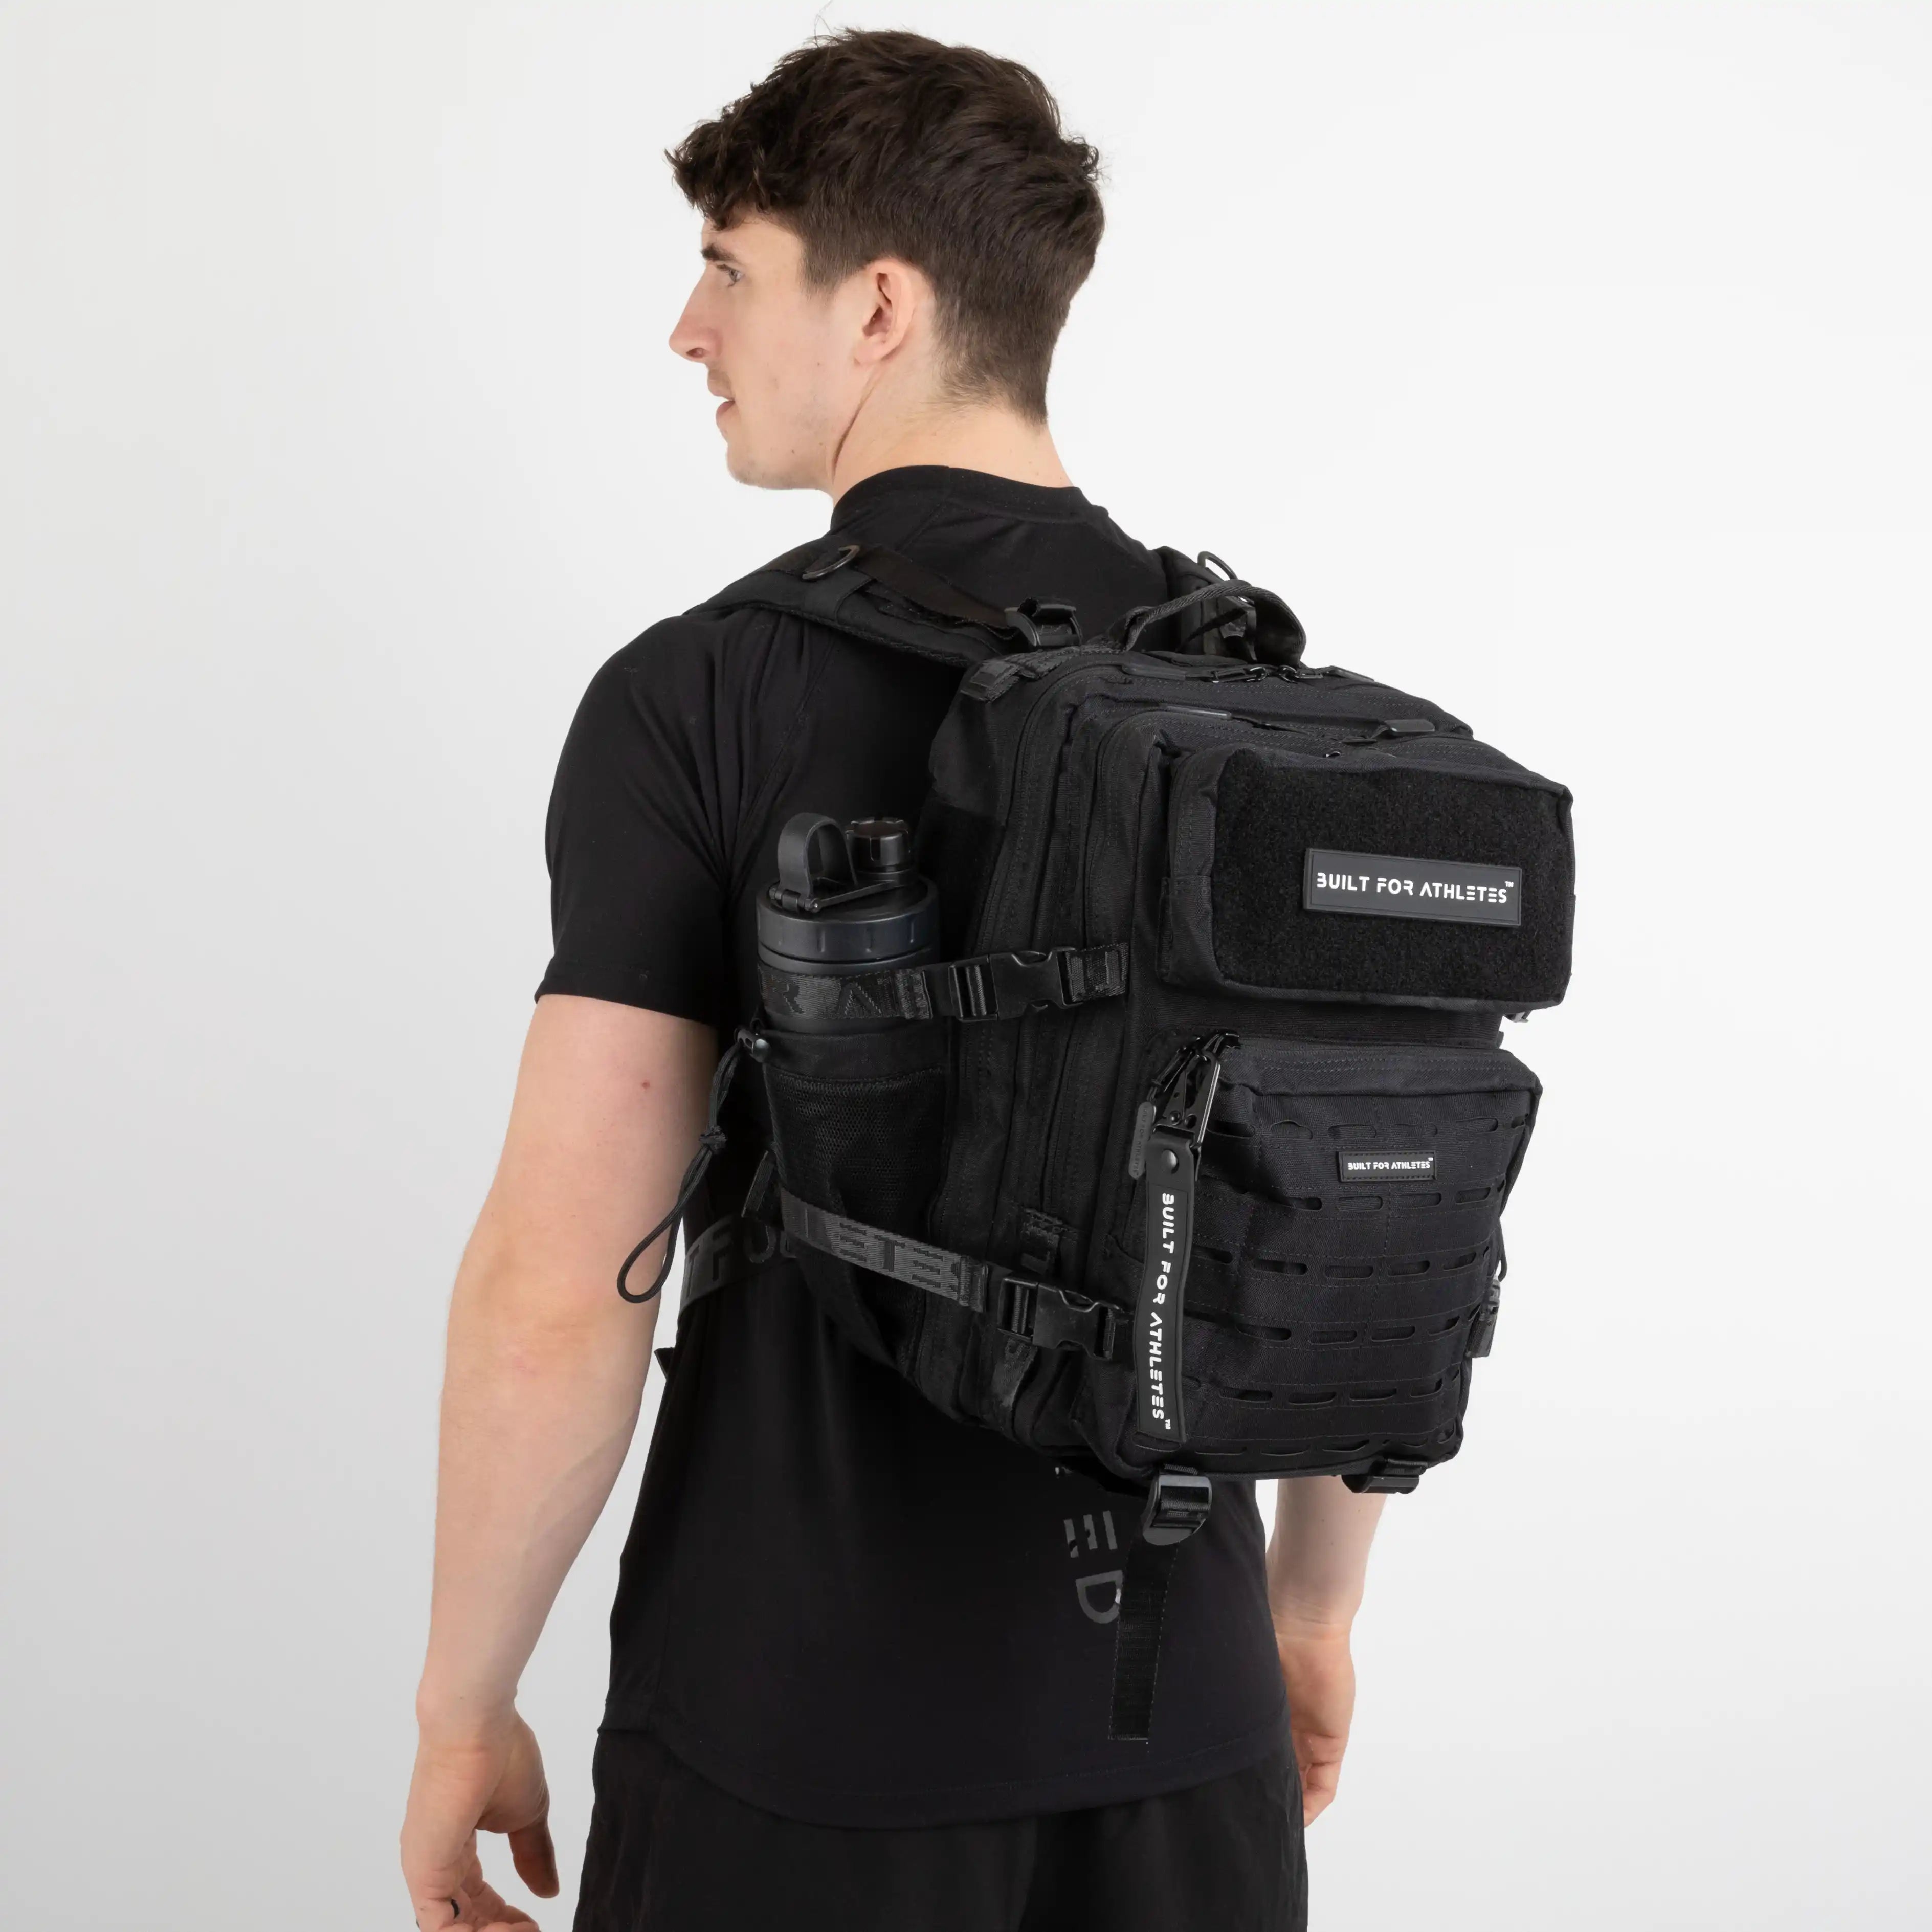 Built for Athletes Backpacks Small Black Gym Backpack